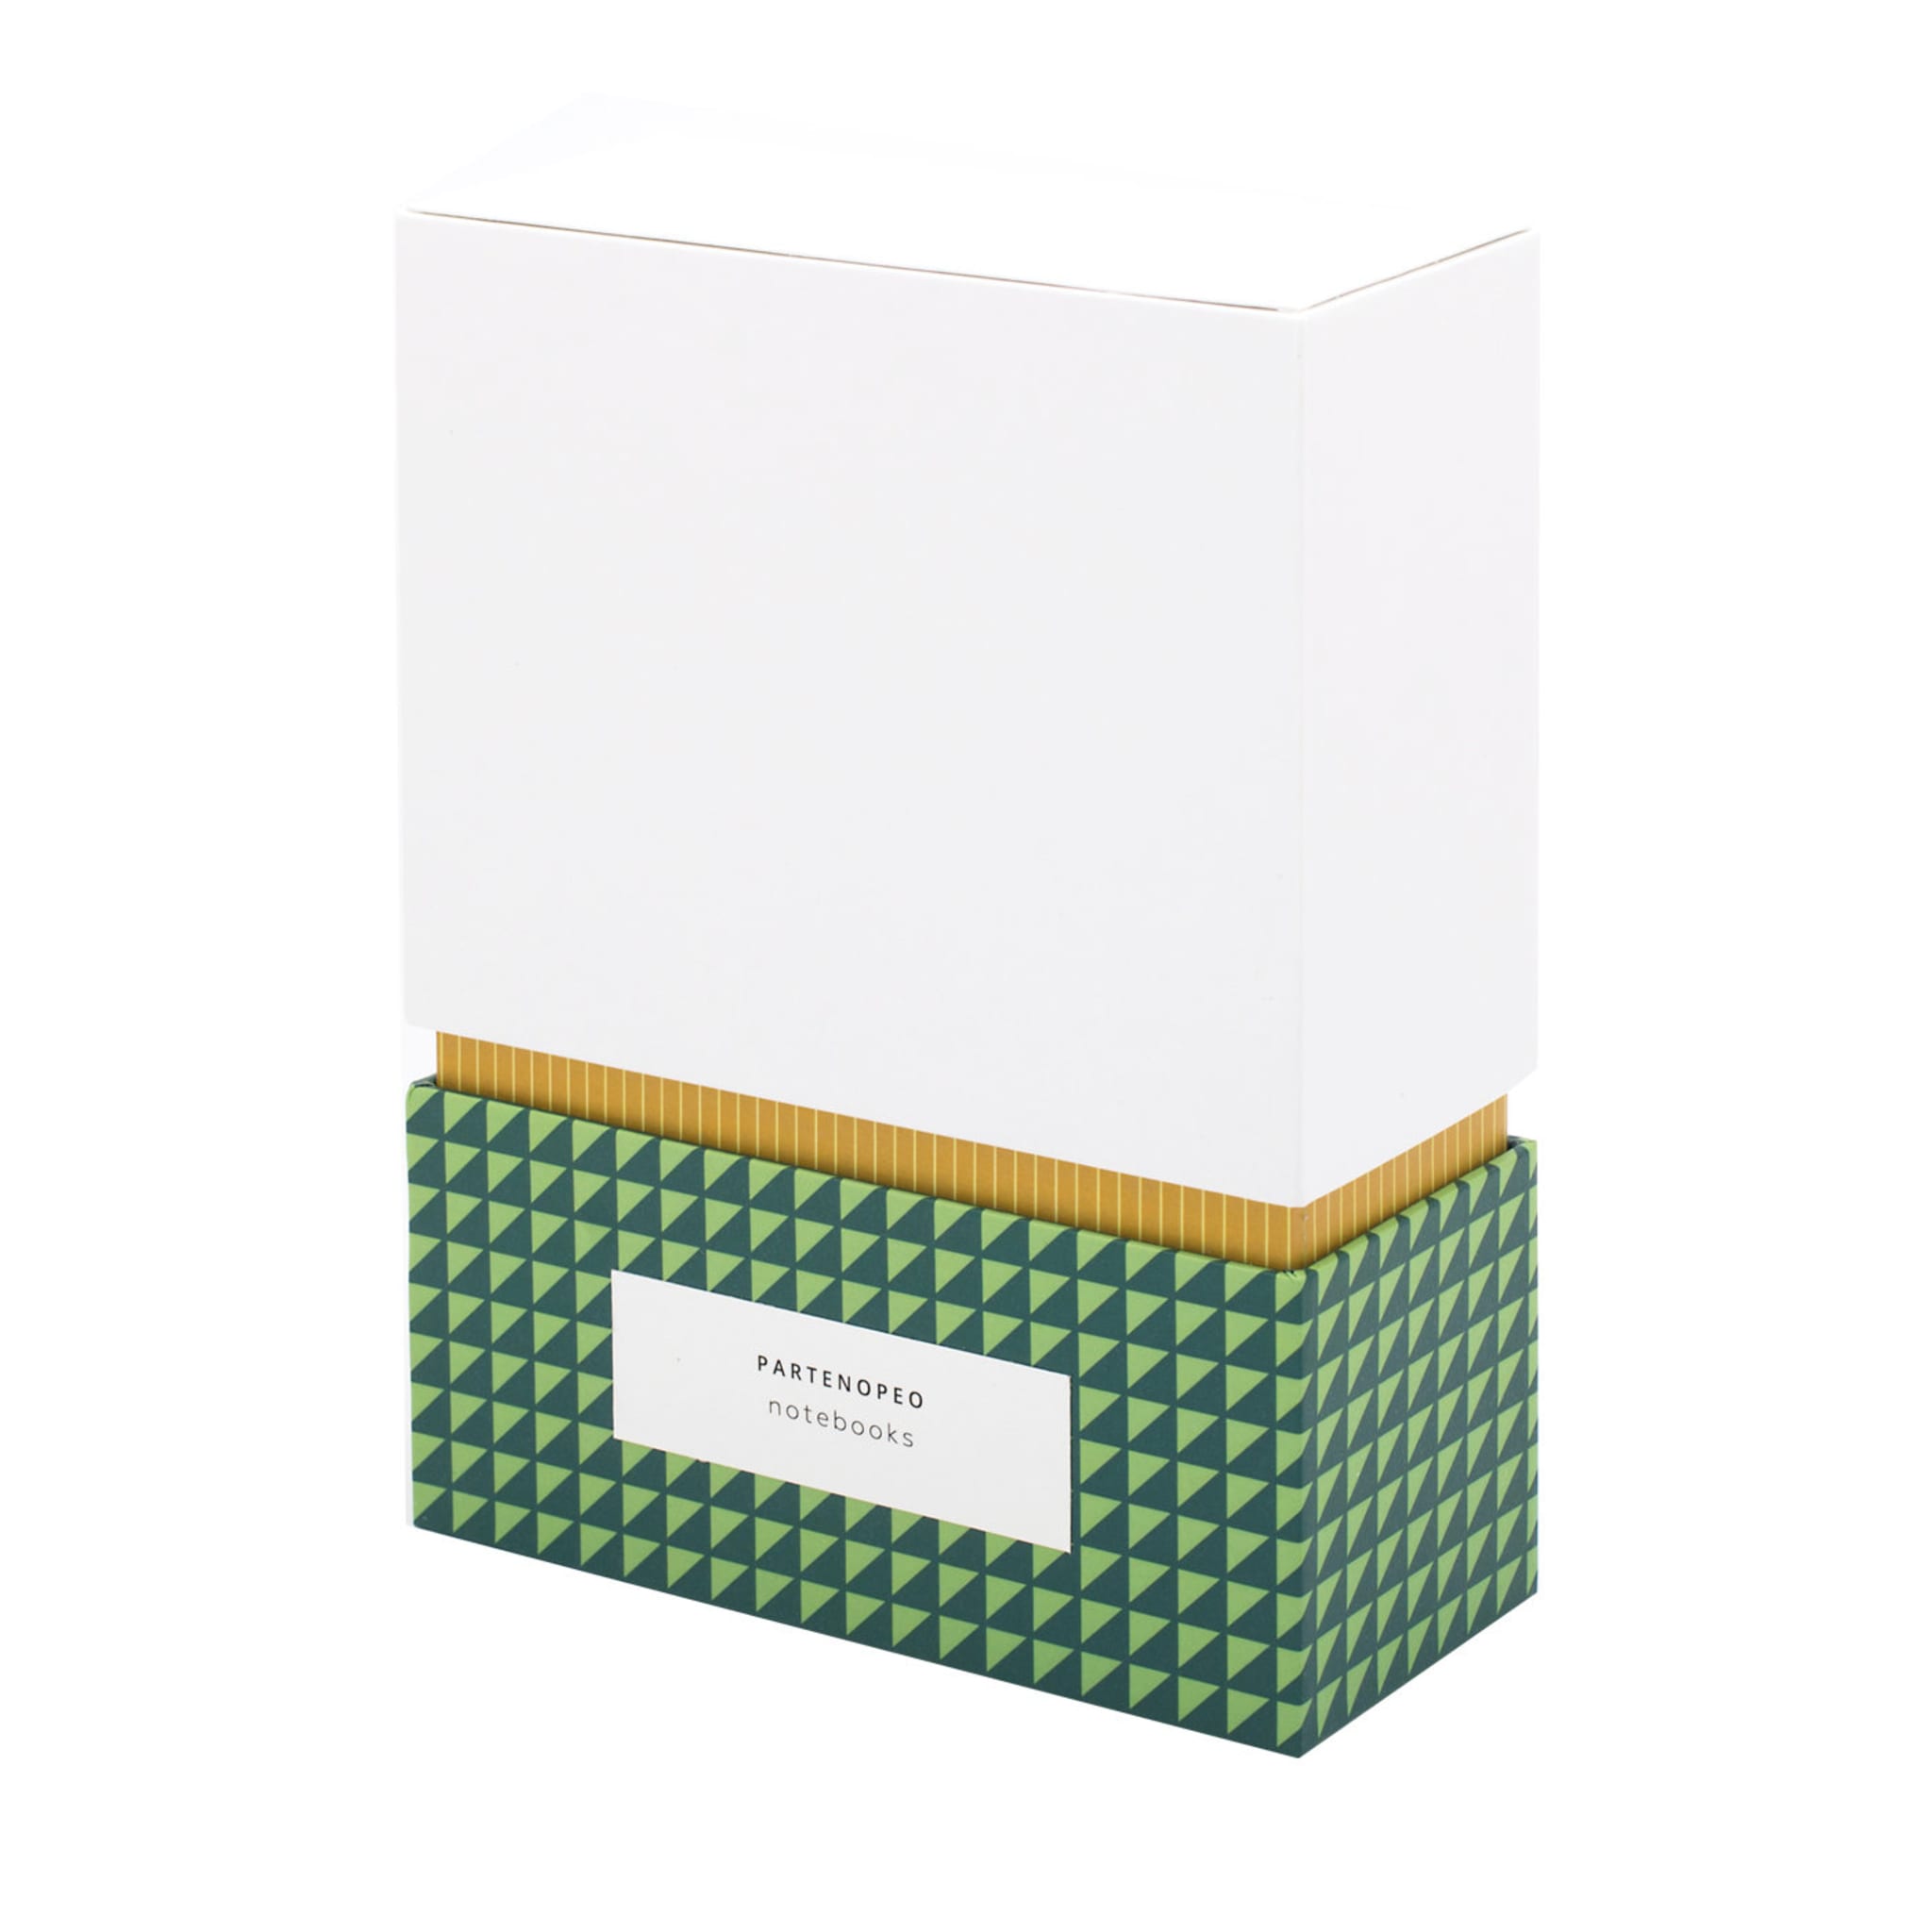 Partenopeo-4 notebooks Paper Box - Main view